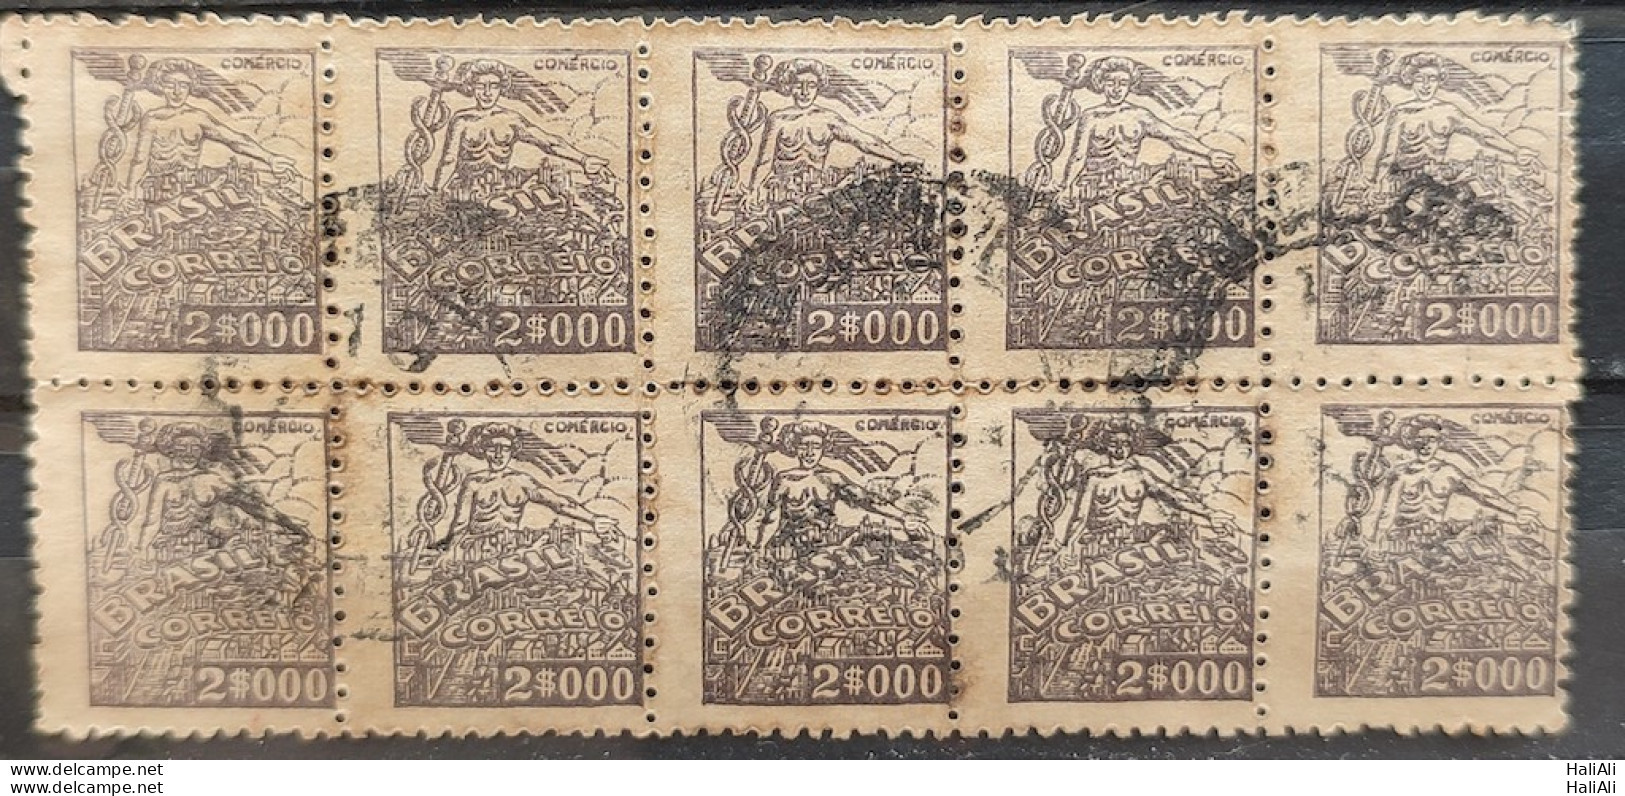 Brazil Regular Stamp RHM 381 Granddaughter Commerce 2000 Reis Filigree Q 1943 Circulated 27 10 Unidades - Used Stamps